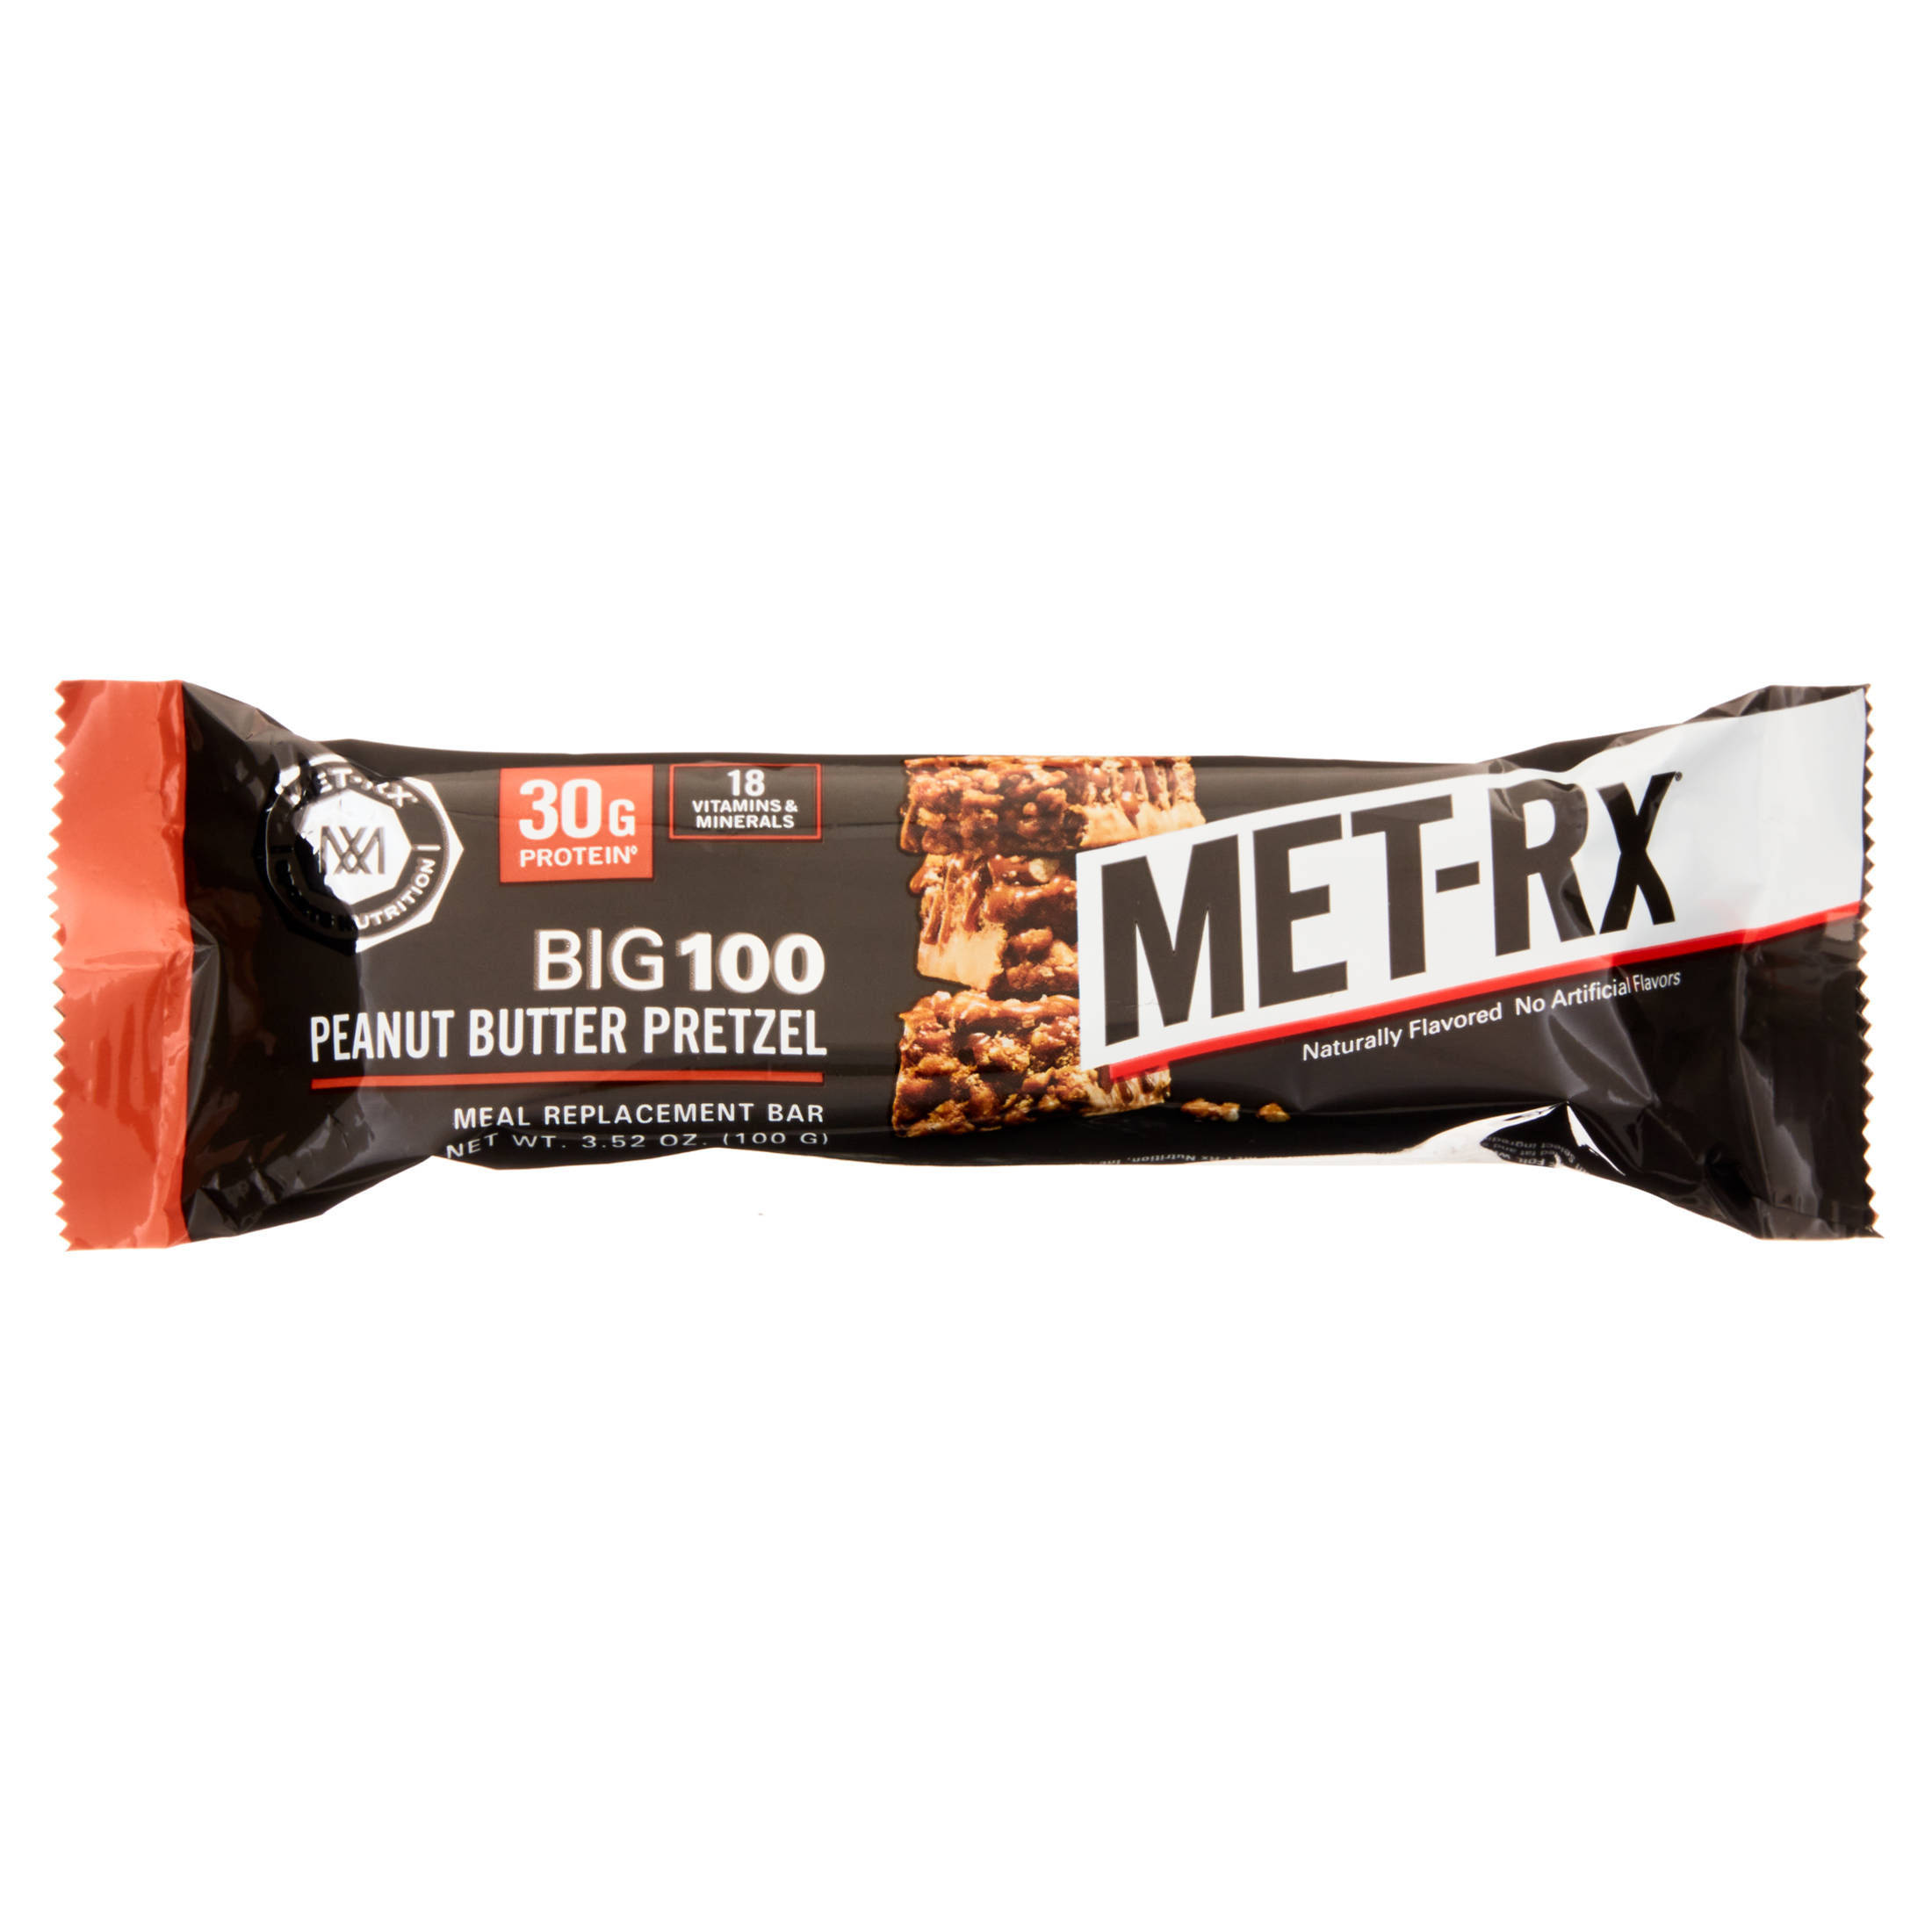 MET-Rx Big 100 Protein Bar, Peanut Butter Pretzel, 30g Protein, 9 Ct - image 3 of 11